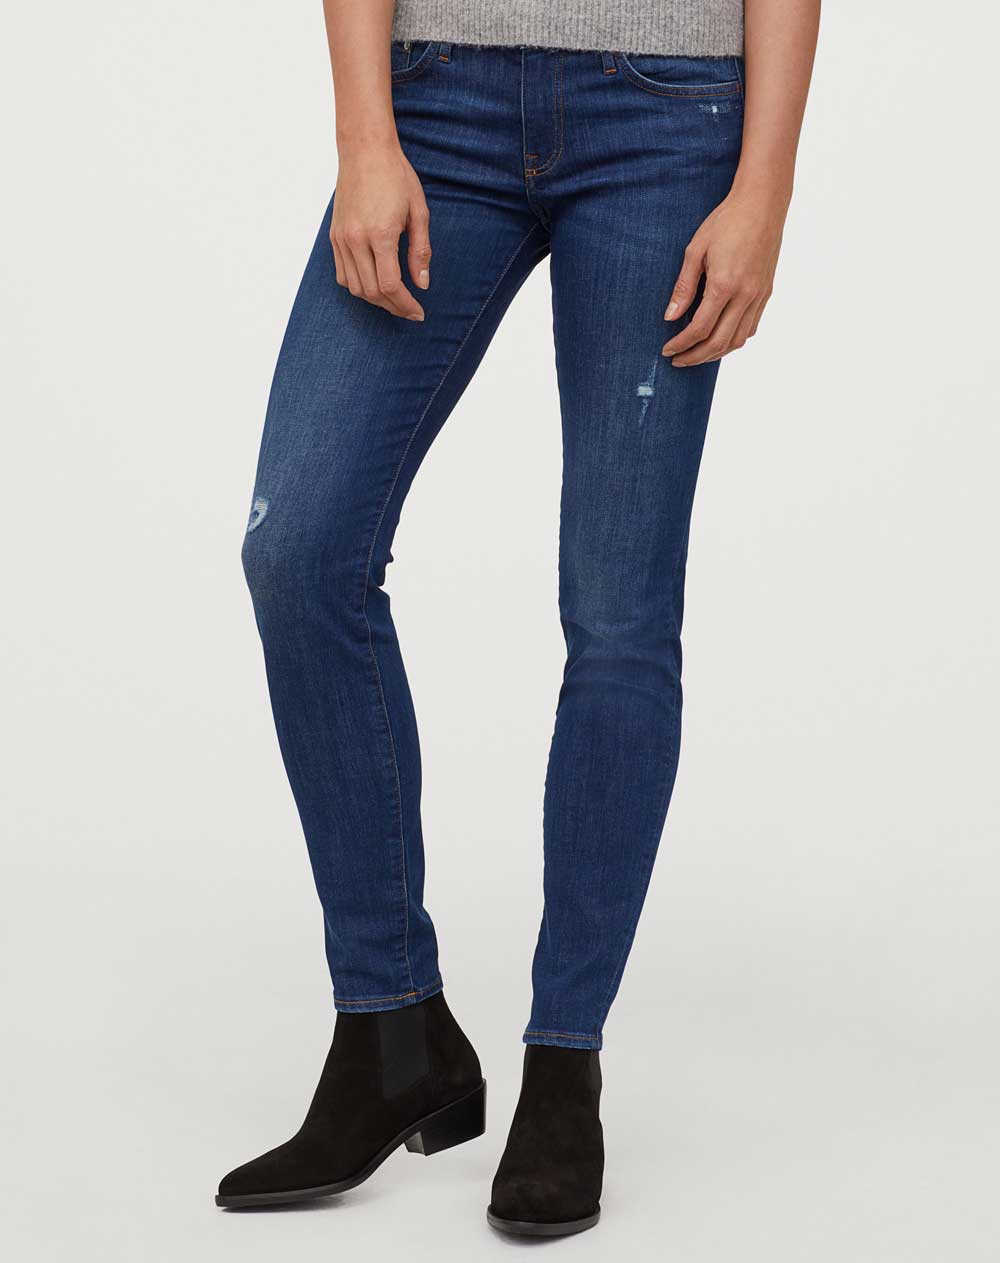 H&M jeans estate 2020